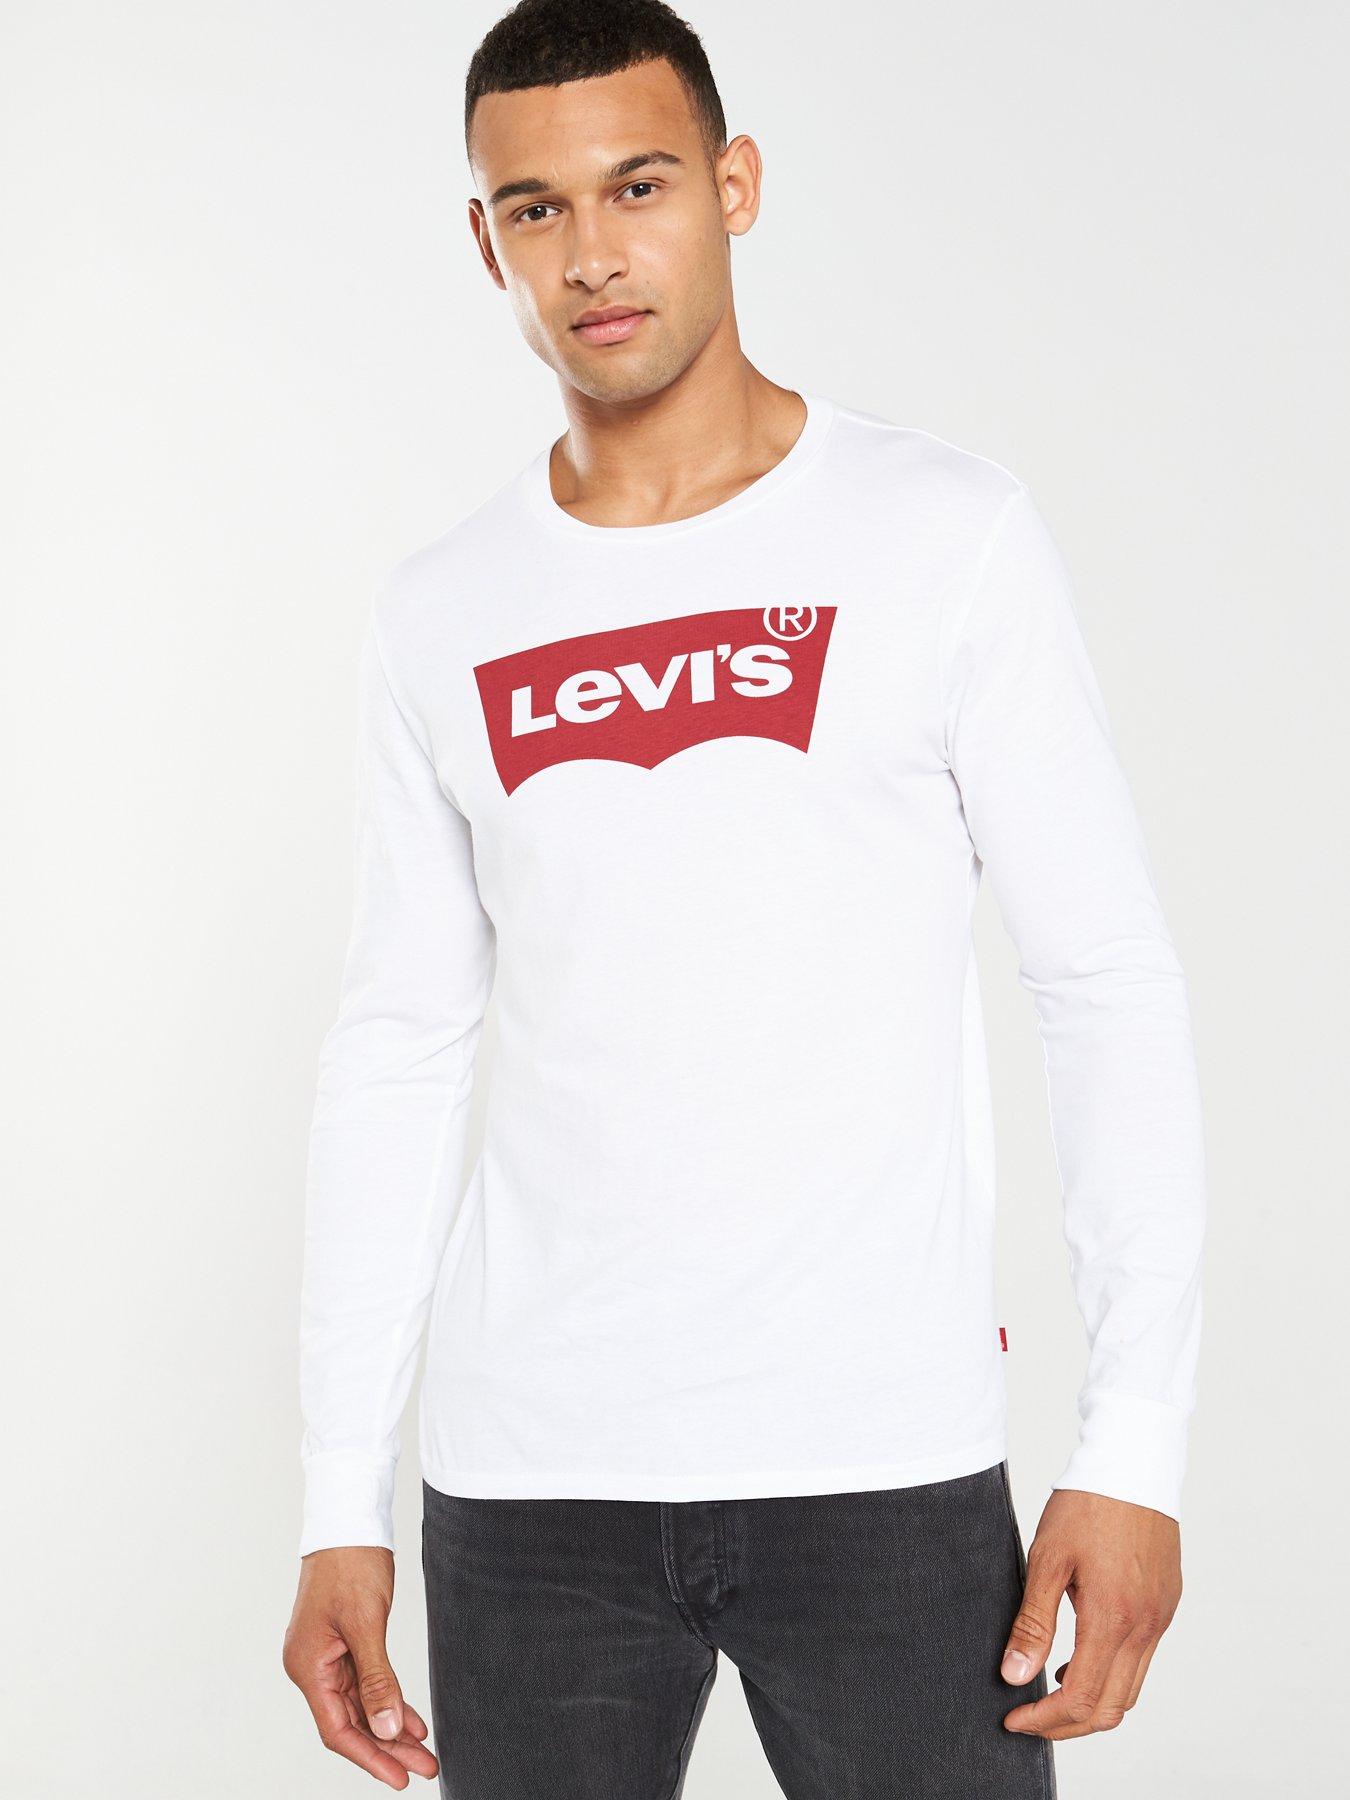 levis white long sleeve t shirt